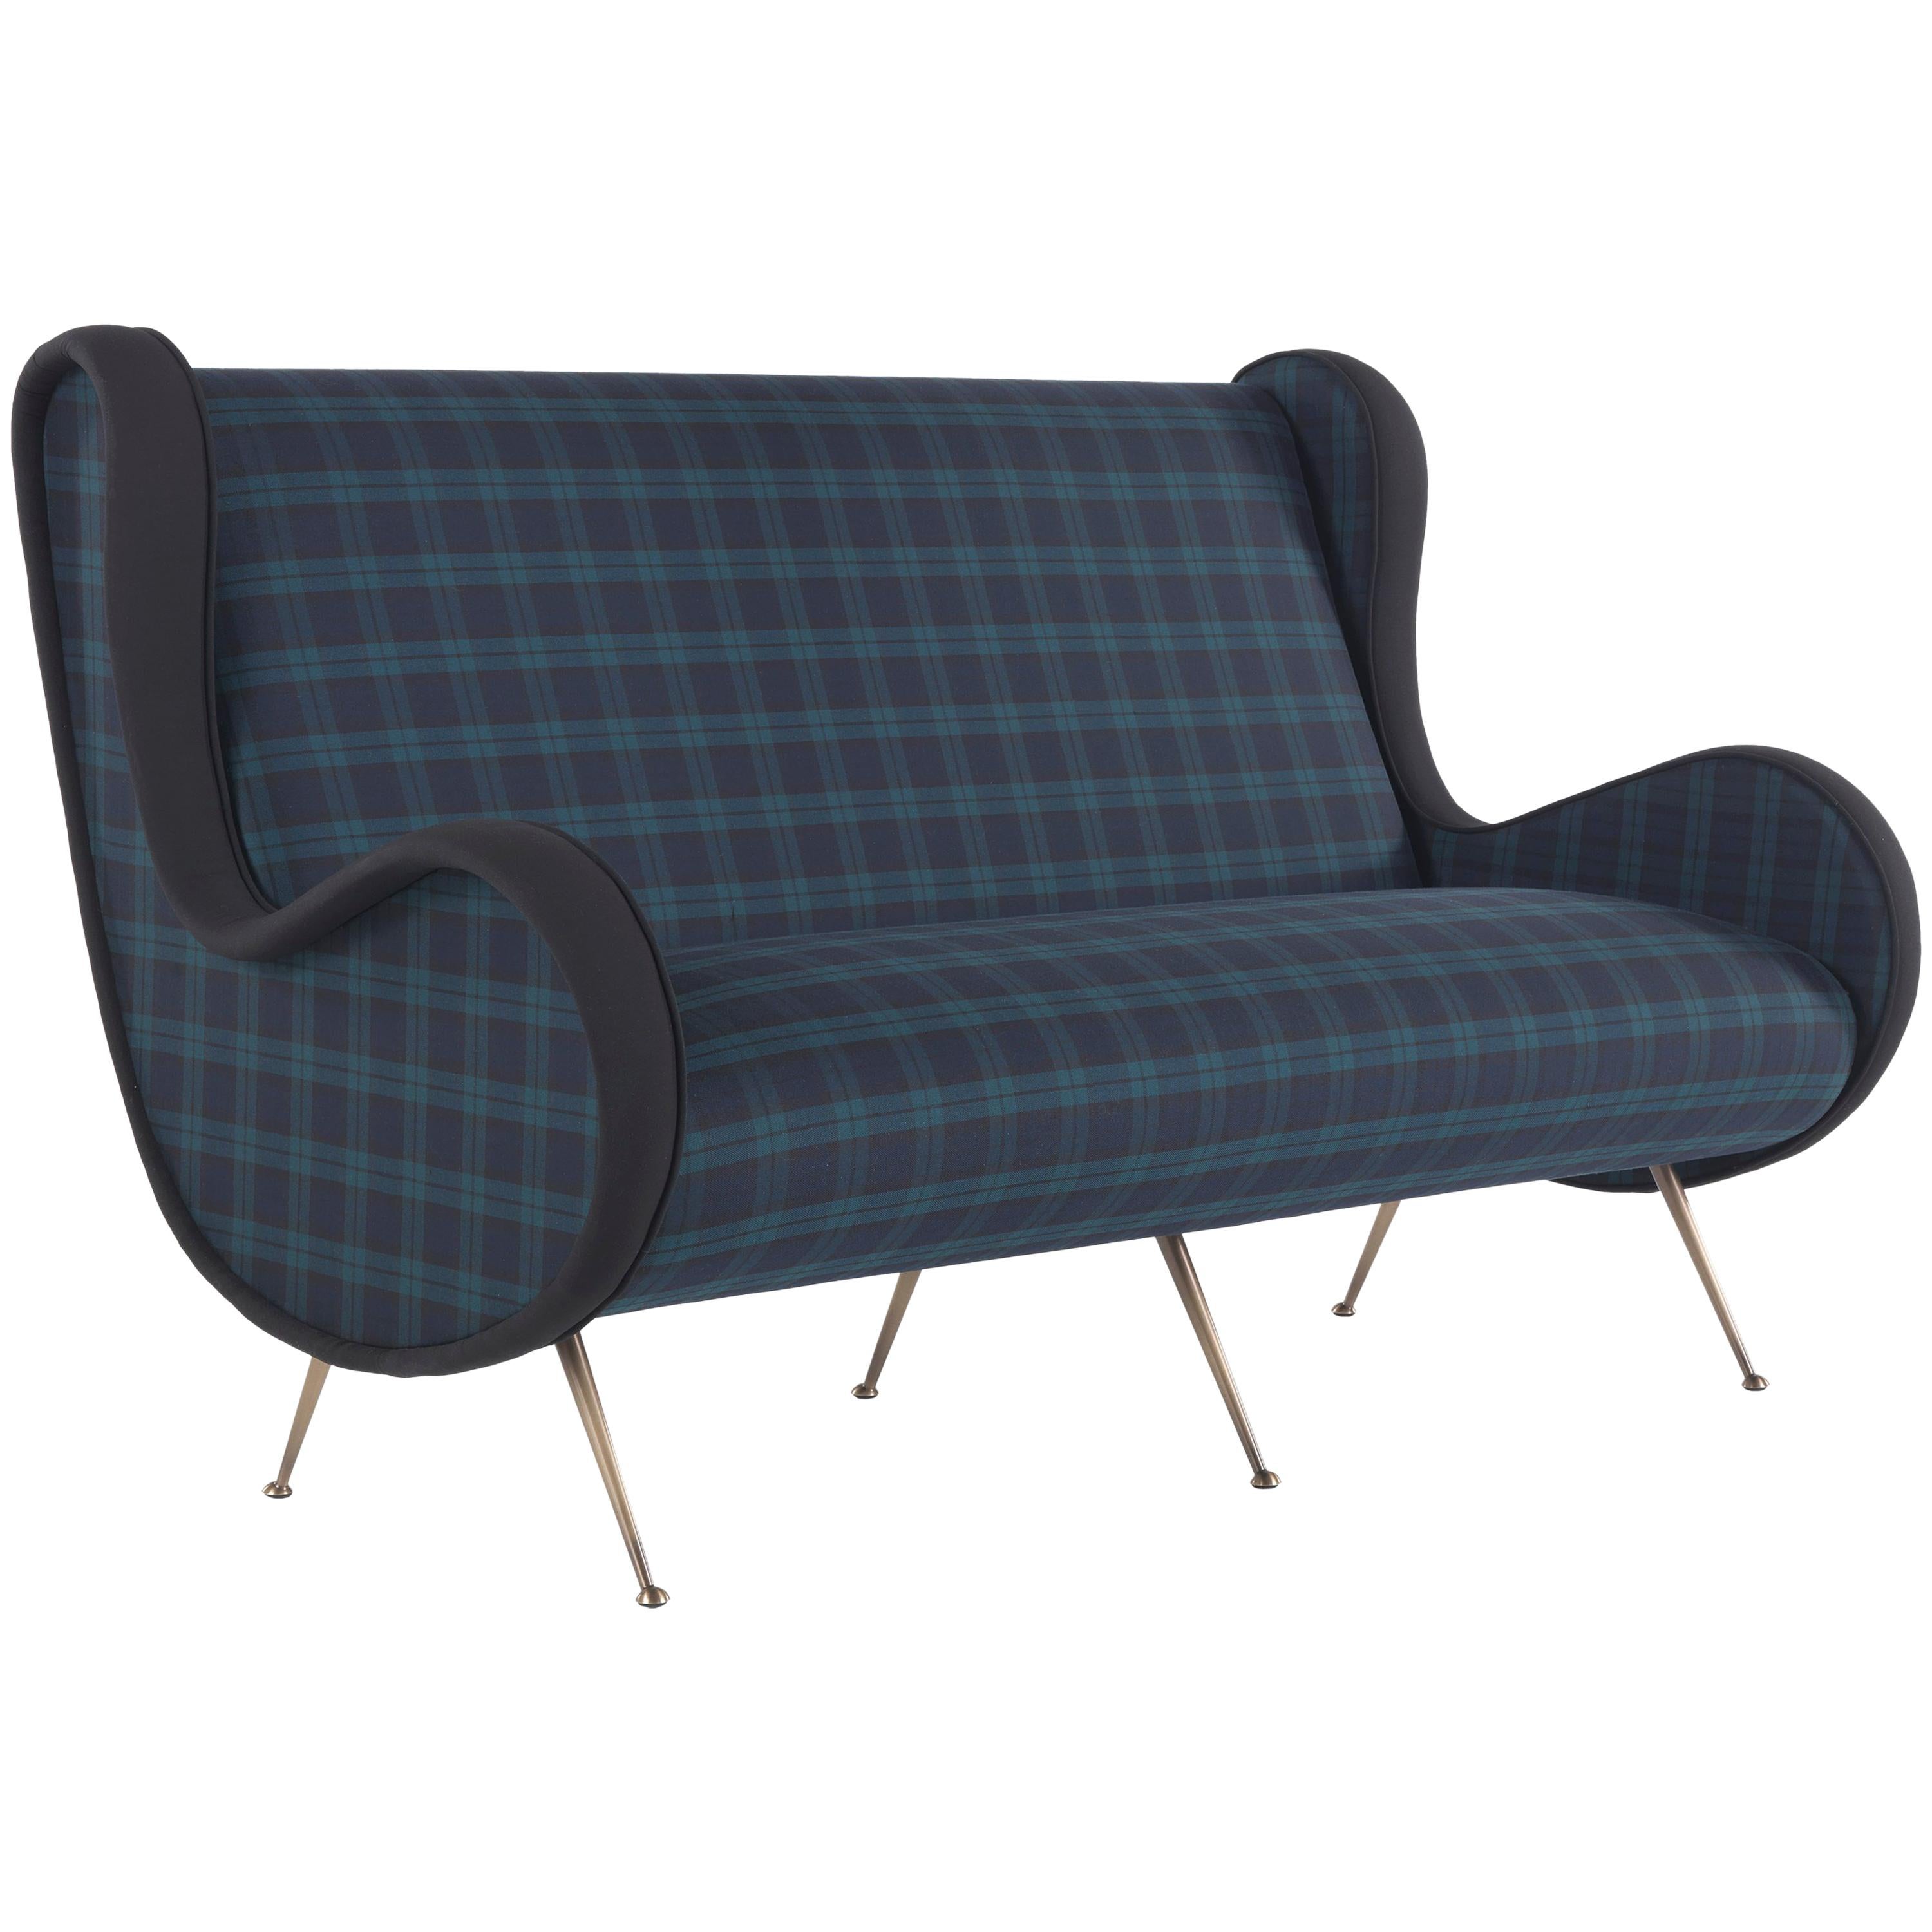 Gianfranco Ferré Tartan Two-Seat Sofa in Blue Blend For Sale